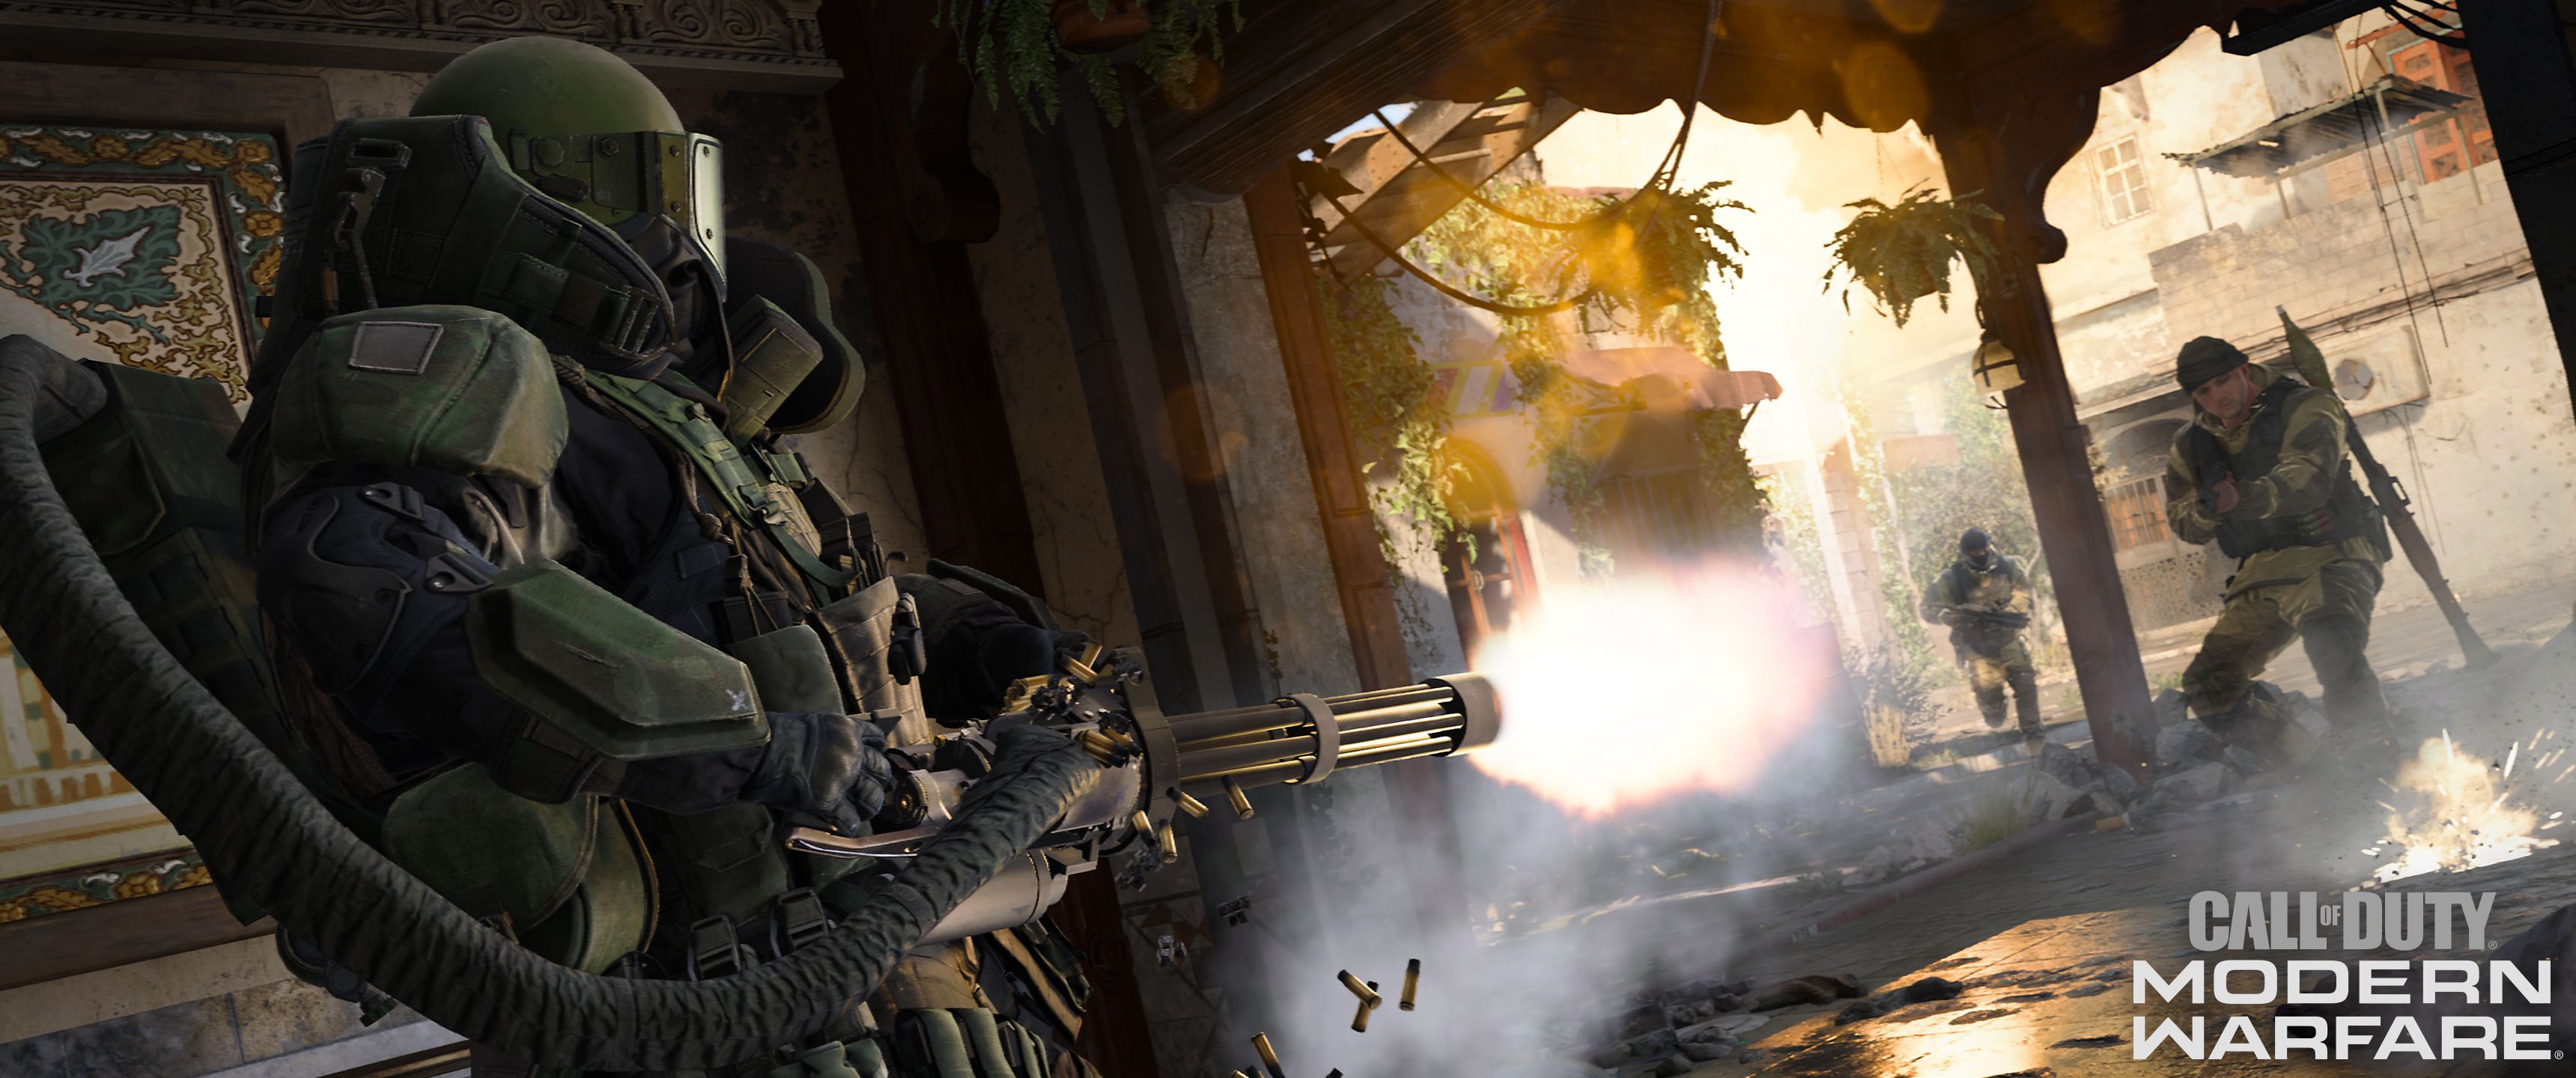 of Duty®: Modern Warfare®: PC Launch ...blog.activision